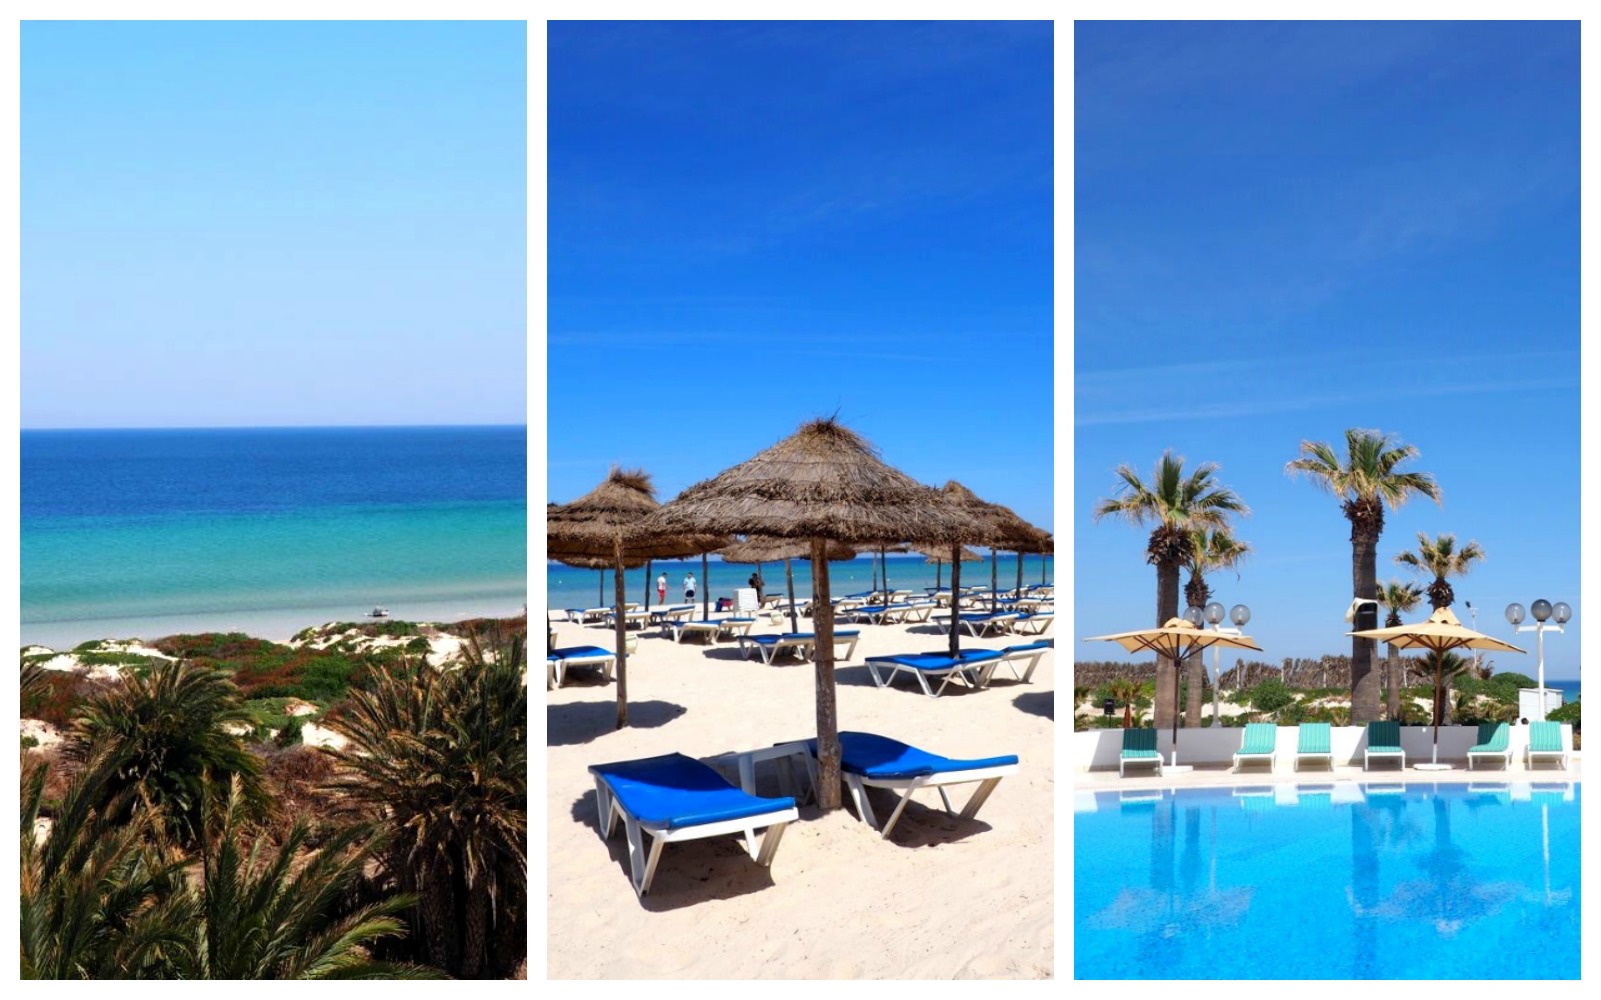 Vacances all-in en Tunisie: mon expérience au One Resort à Monastir